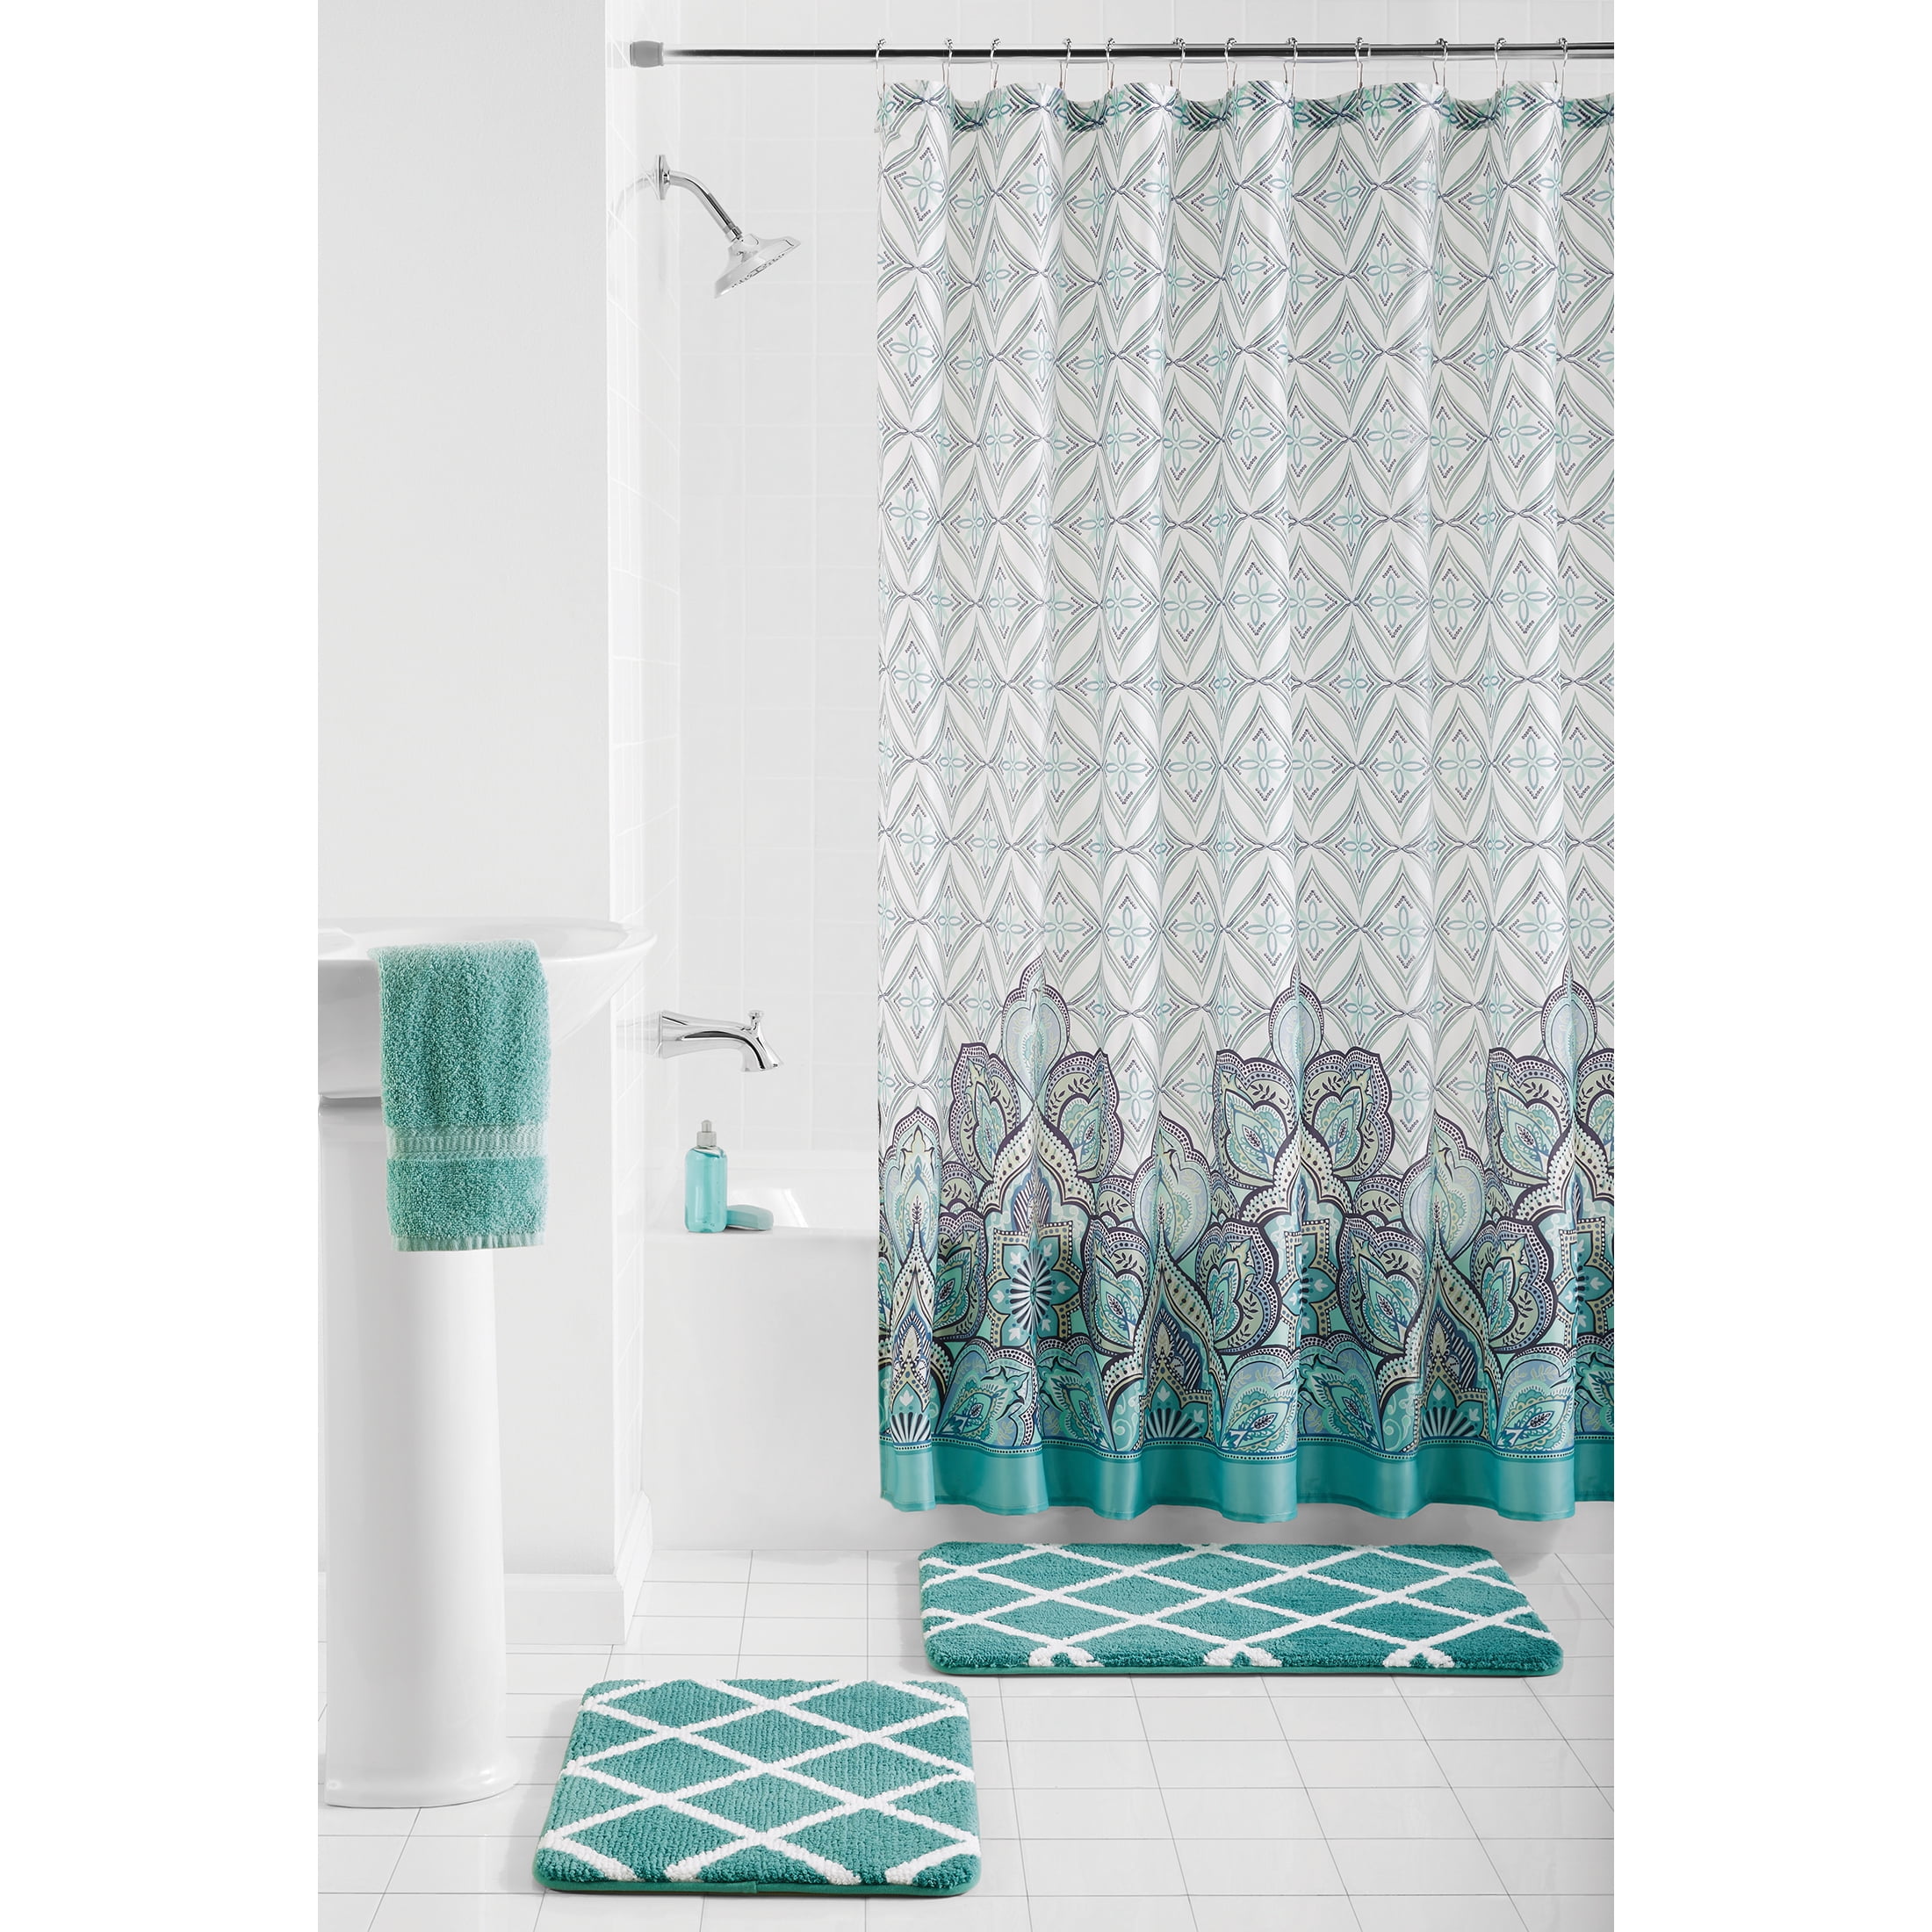 Details about   Pretty Woman Bathroom Rug Set Shower Curtain Thick Toilet Lid Cover Bath Mat 